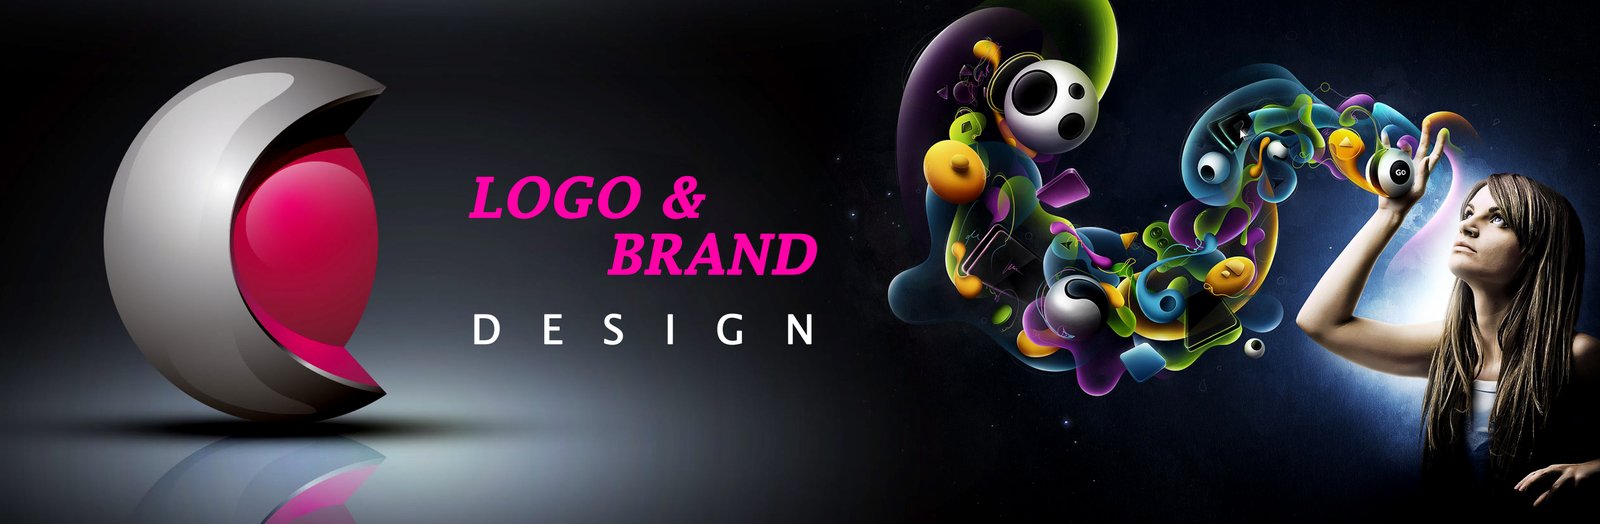 Logo Design Services Kolkata india, logo designing, logo design companies, best logo design company in Kolkata india, affordable logo design service, brand and logo design, creative logo design